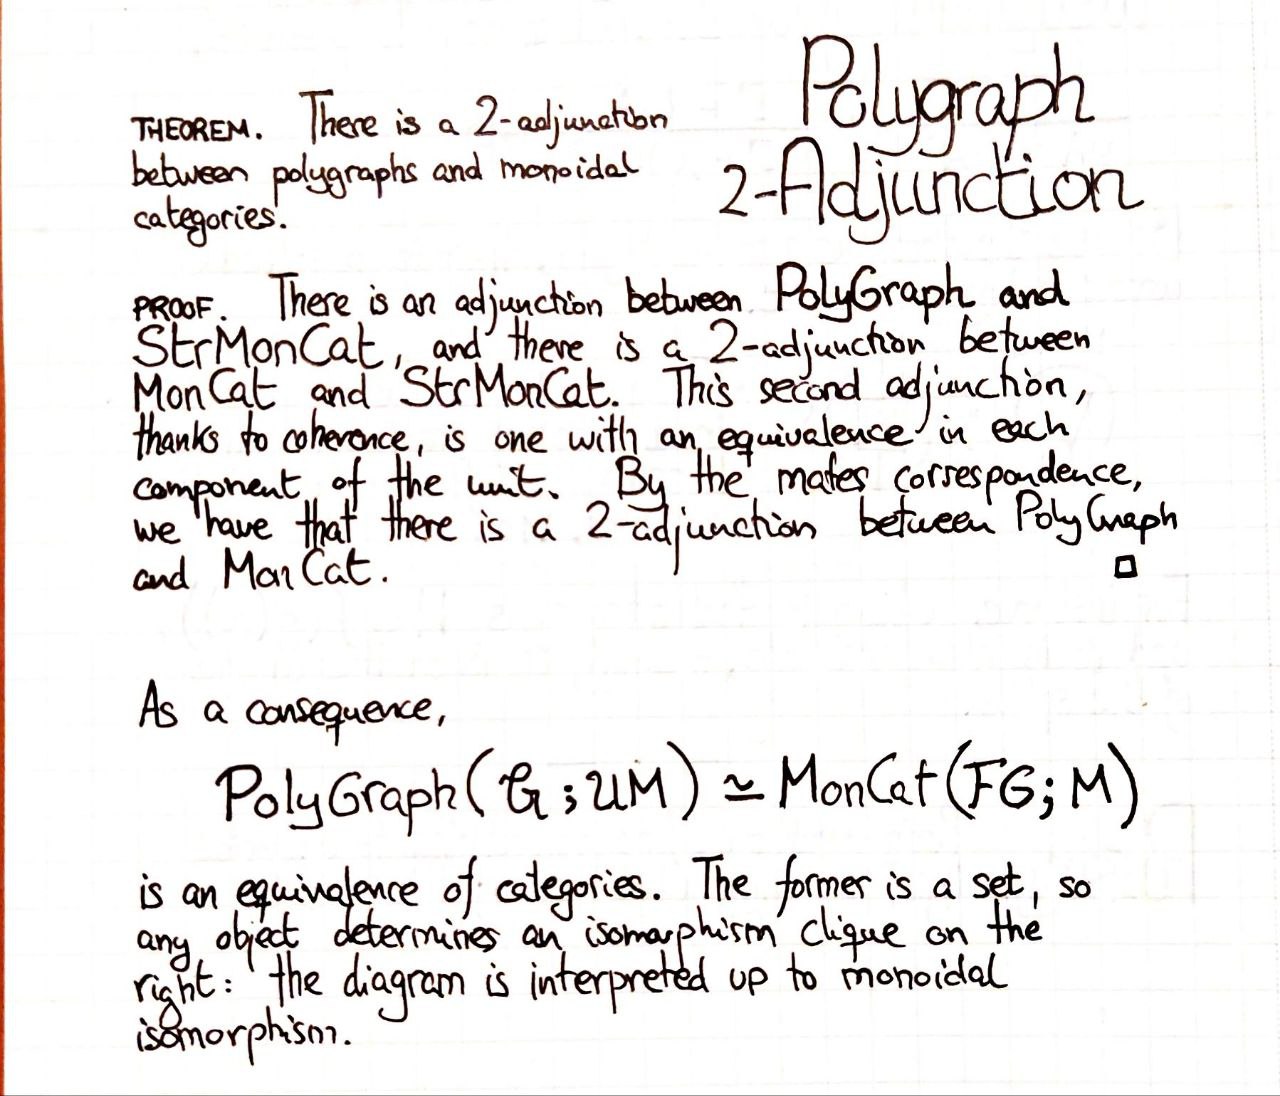 polygraph-2-adjunction